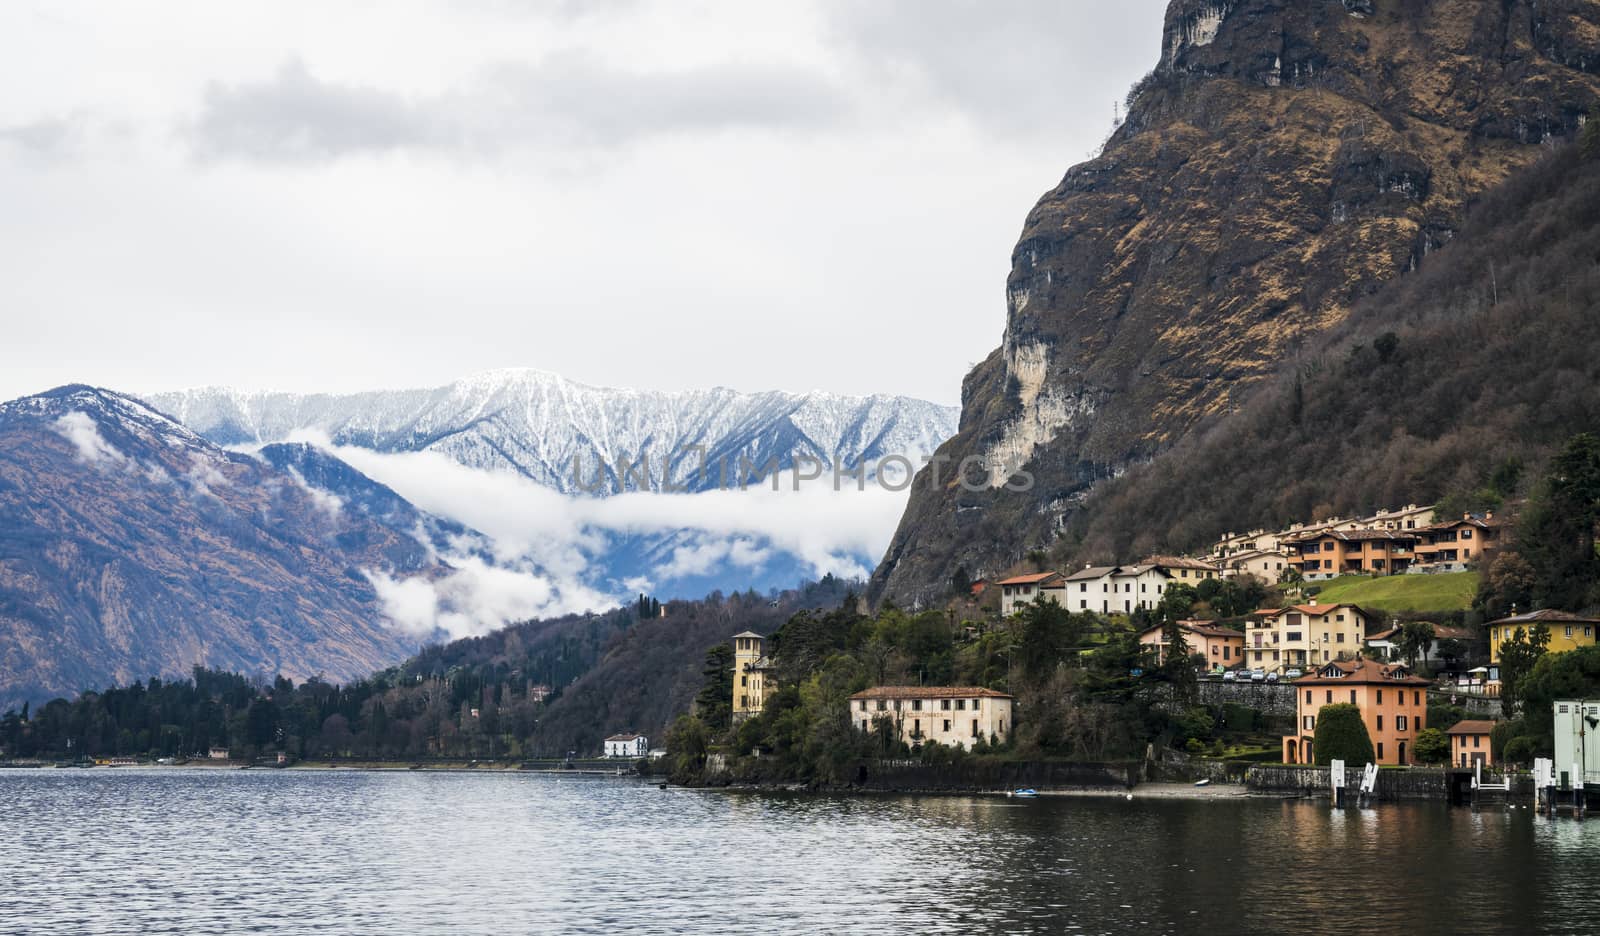 Mennagio, Lake Como, Italy in spring time.